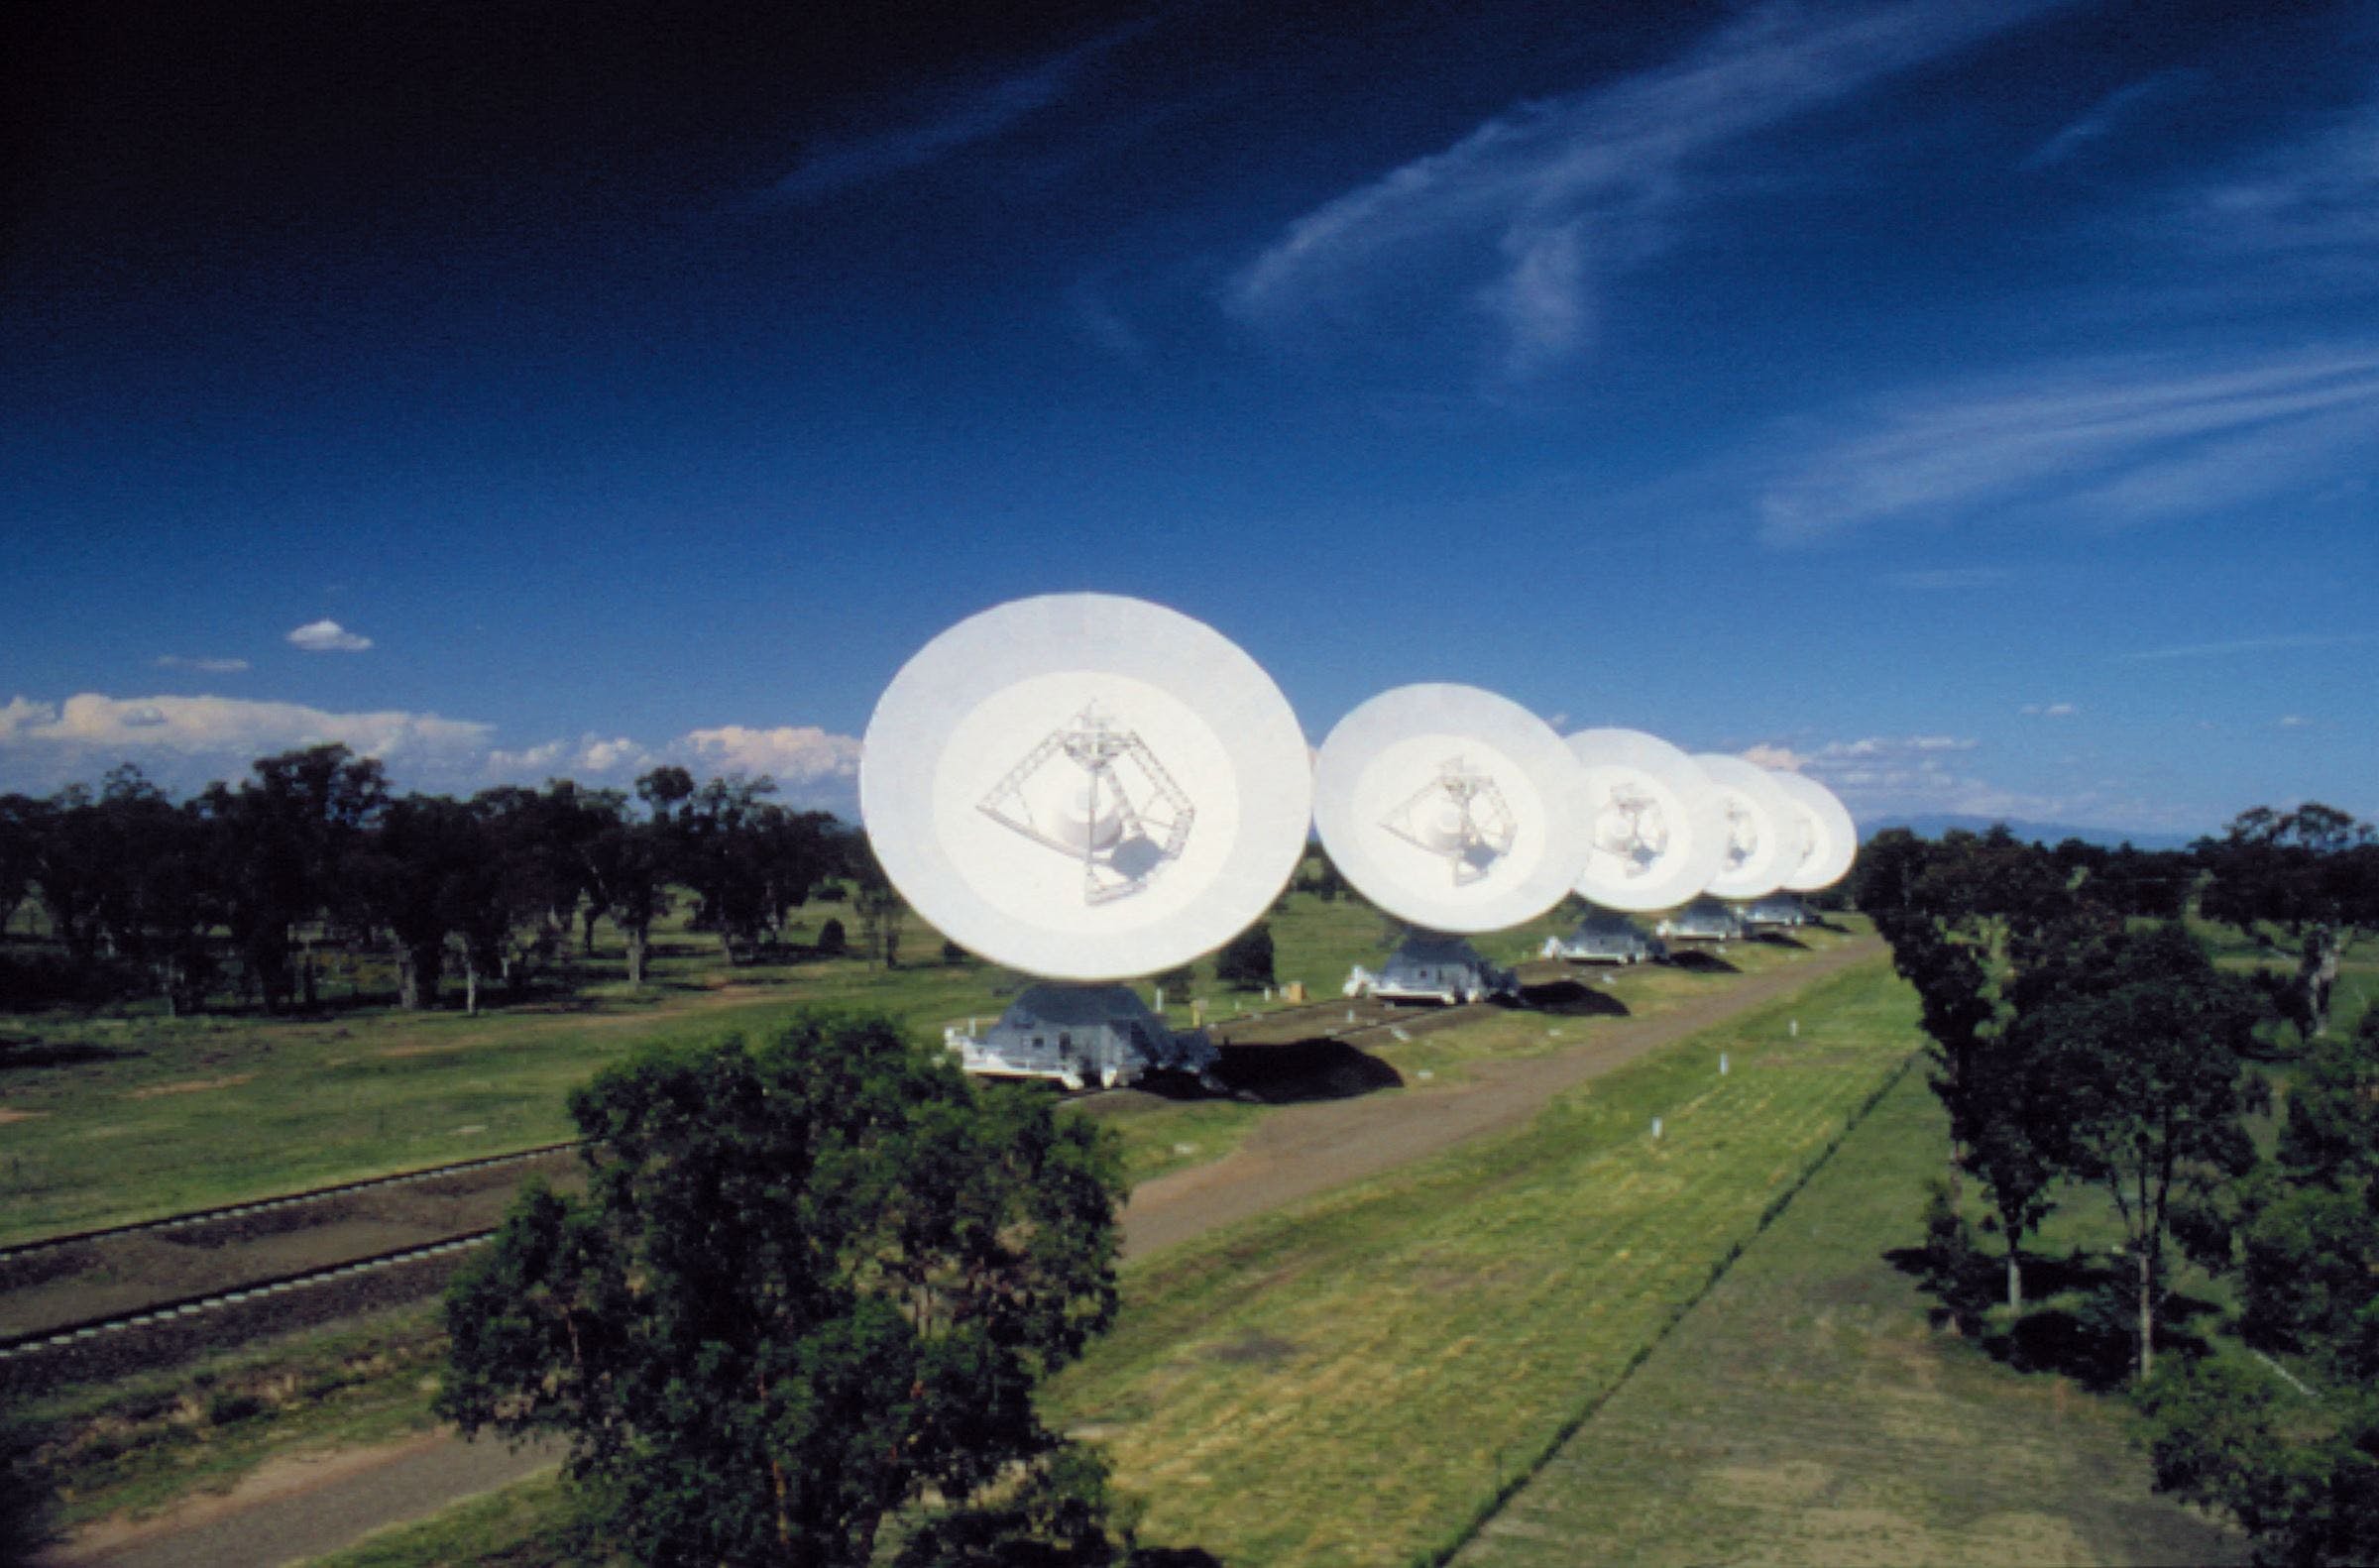 CSIRO Australia Telescope Narrabri - Accommodation Rockhampton